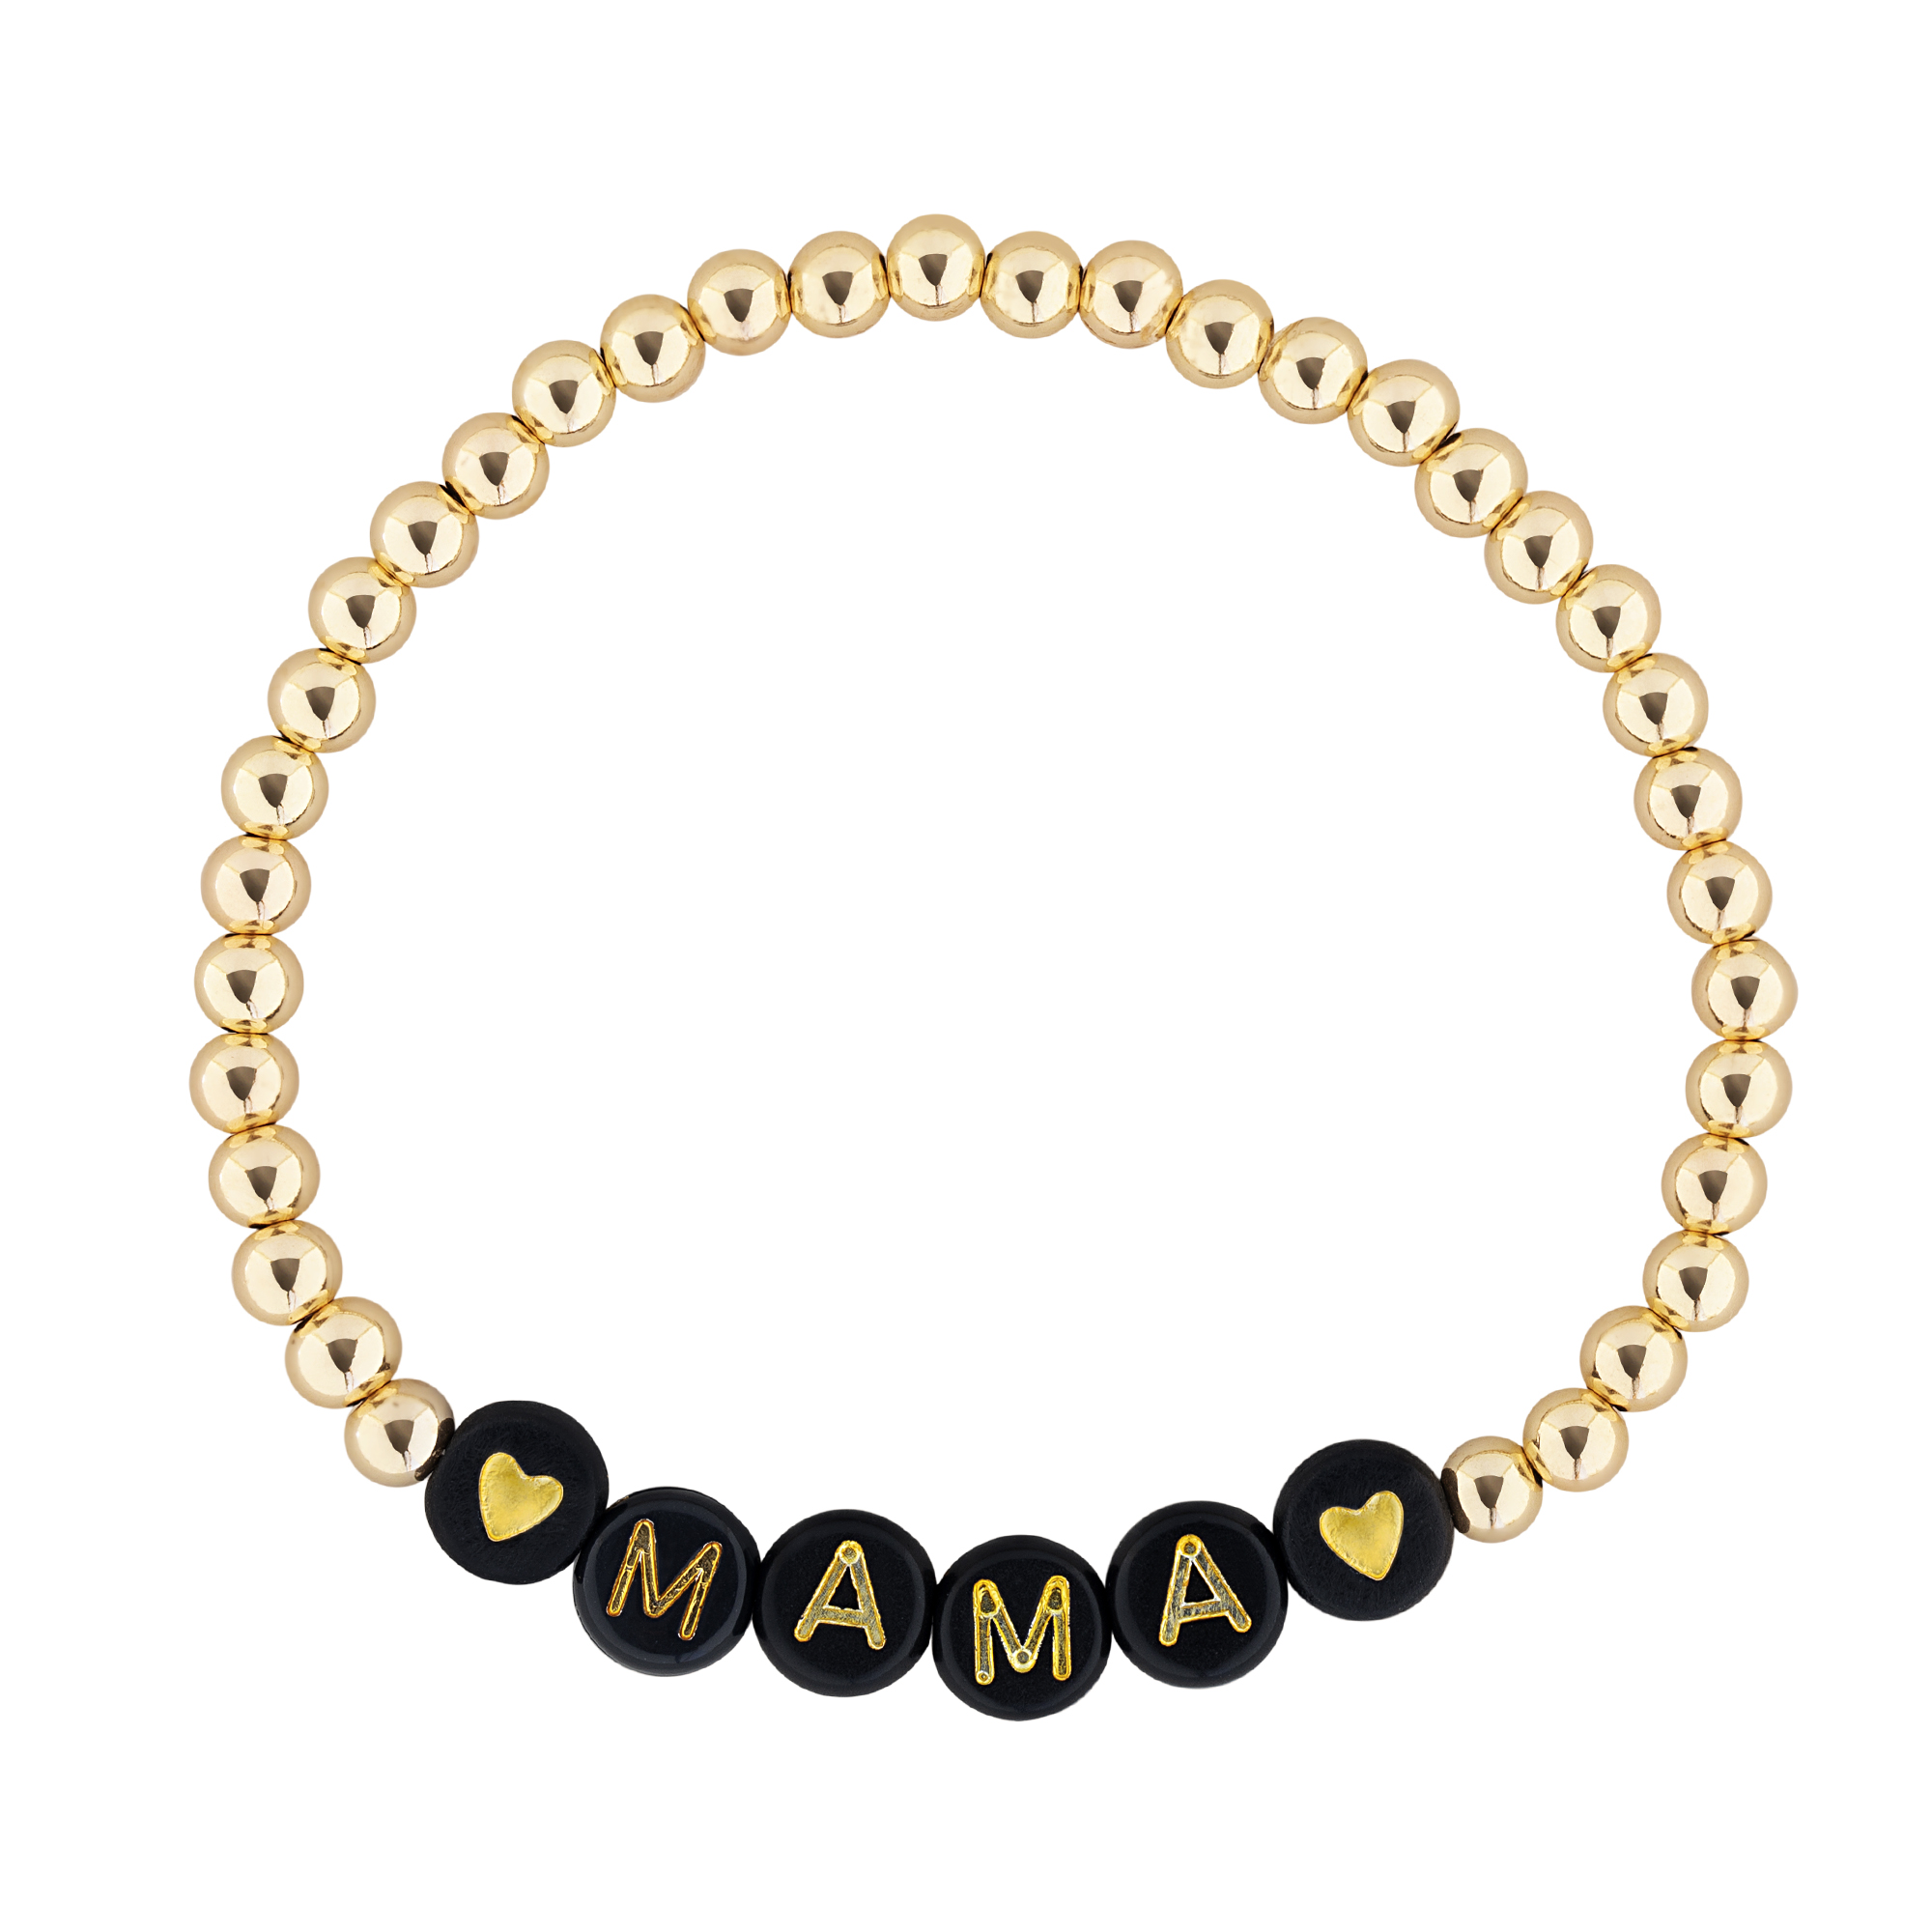 Mama Gold Filled Word Beaded Bracelet by Bonnie Jennifer.